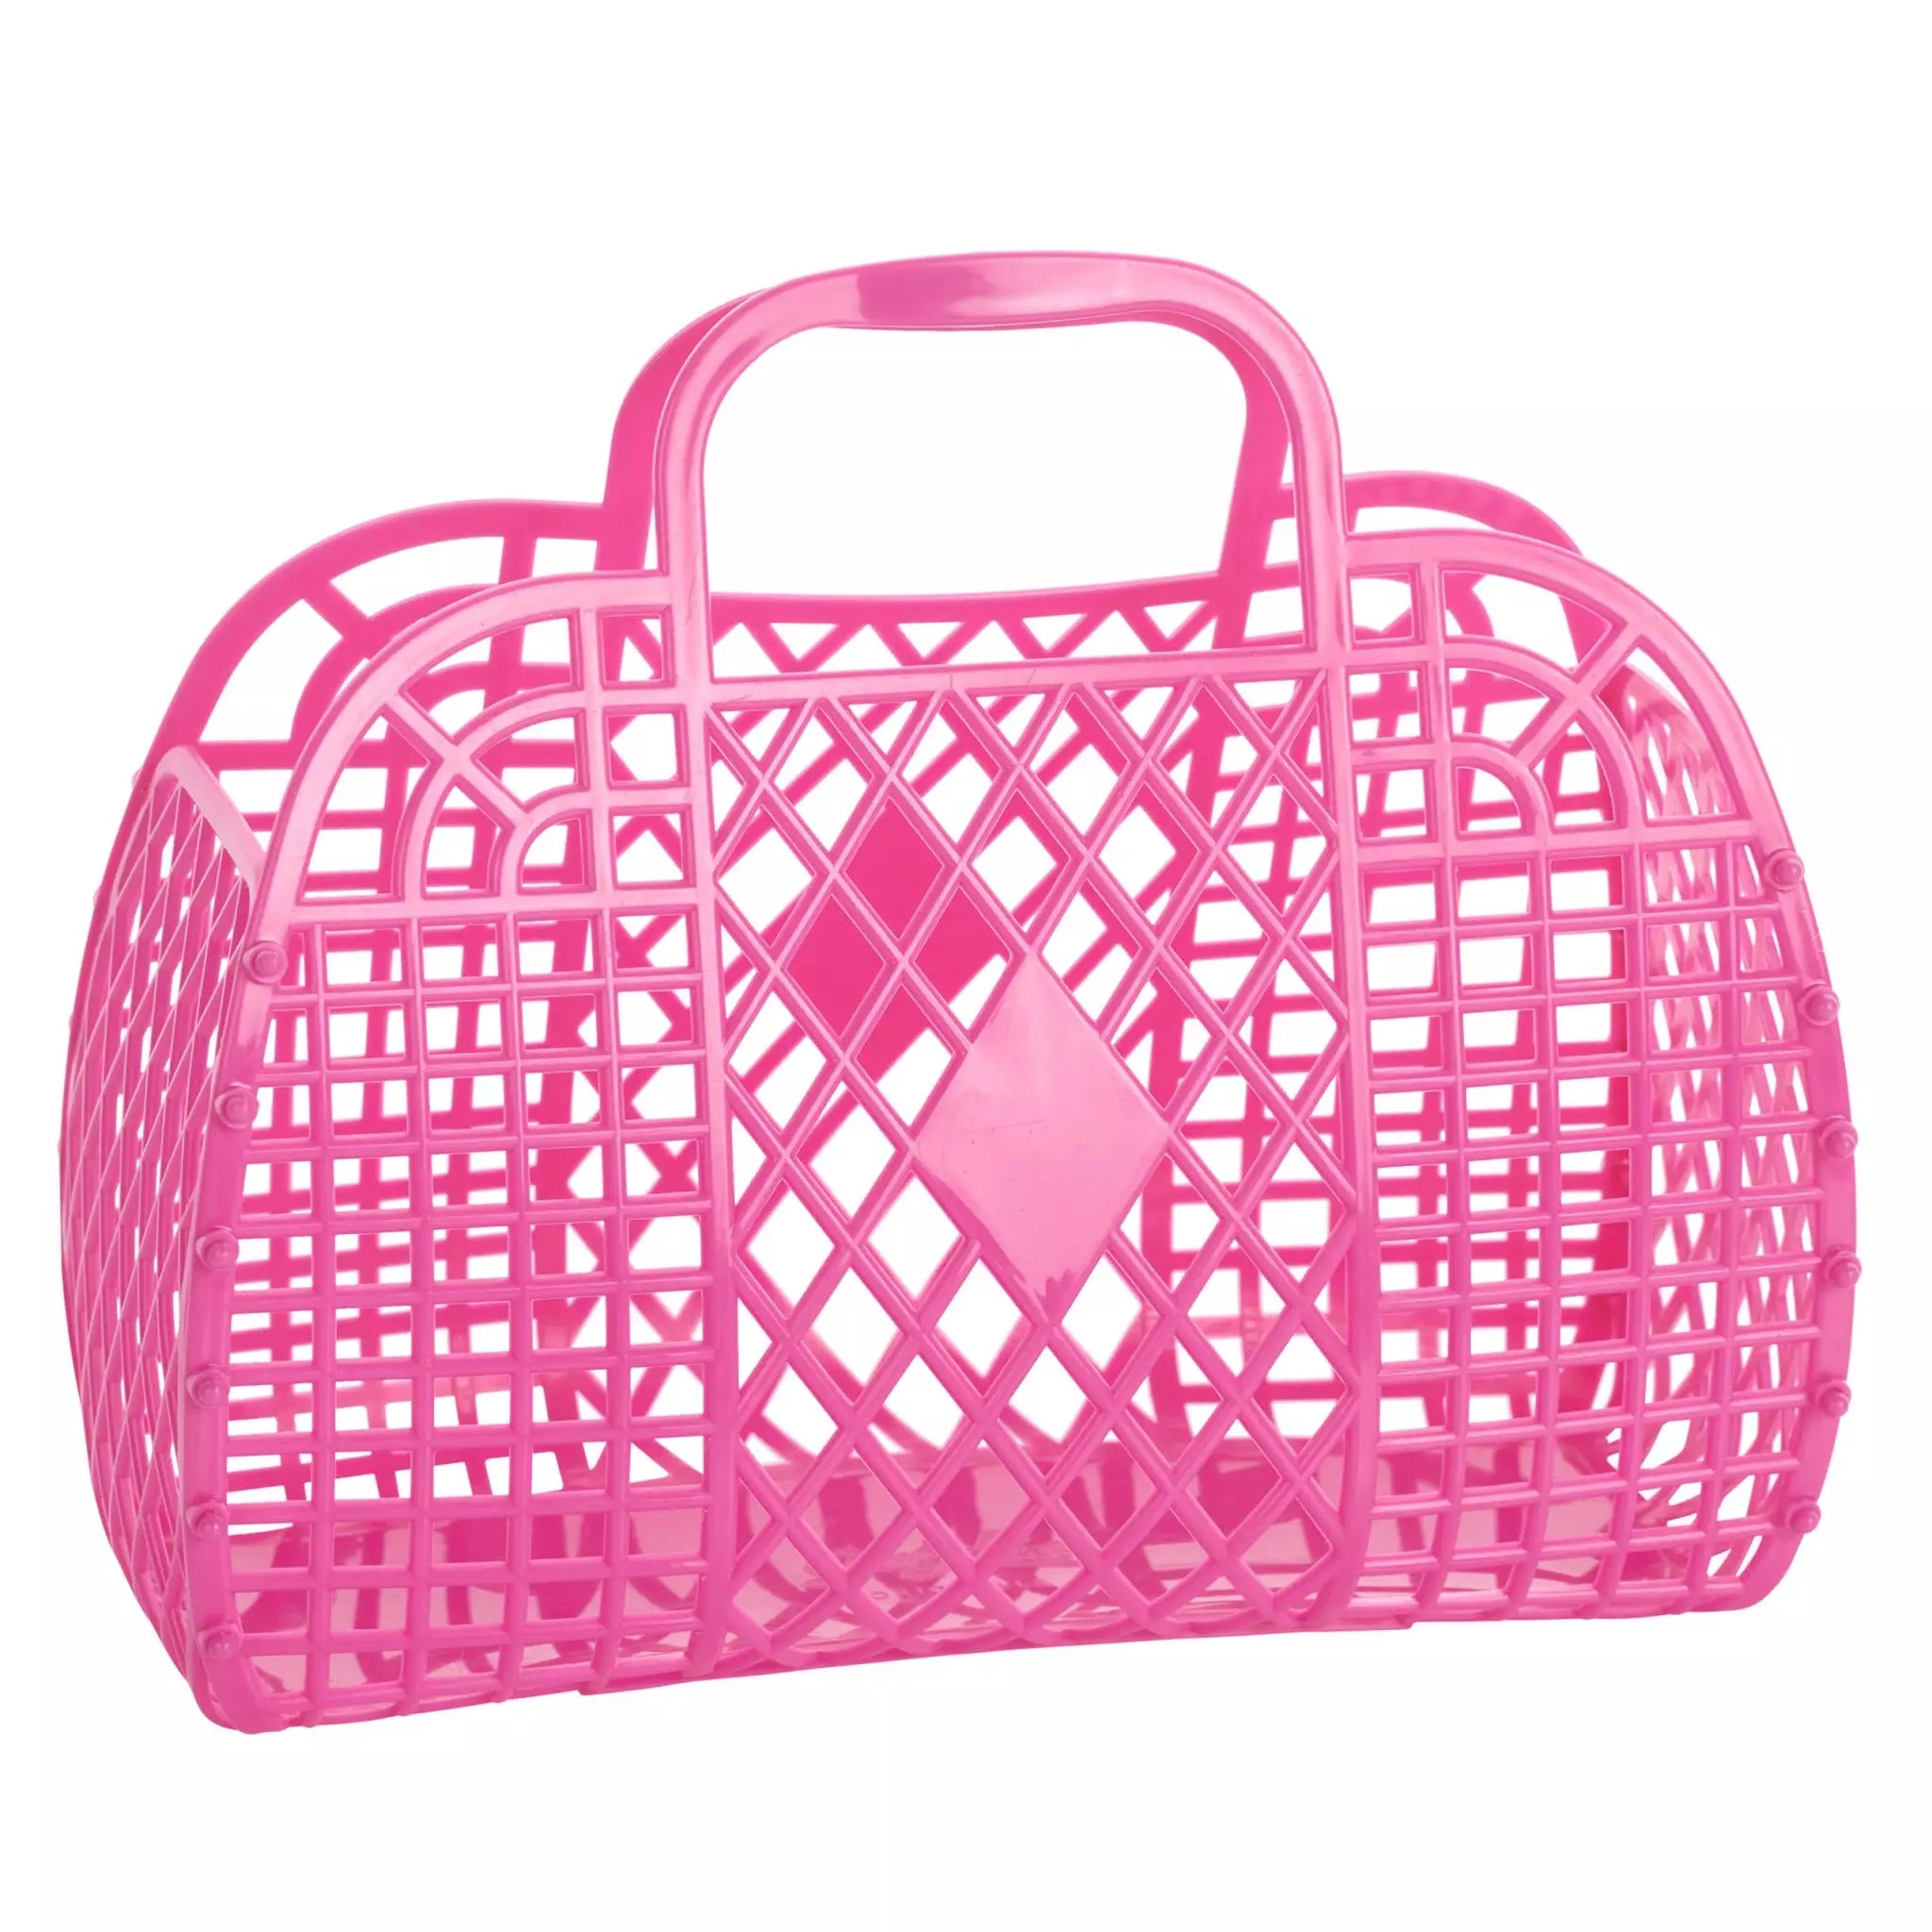 Retro Basket - Large Berry Pink